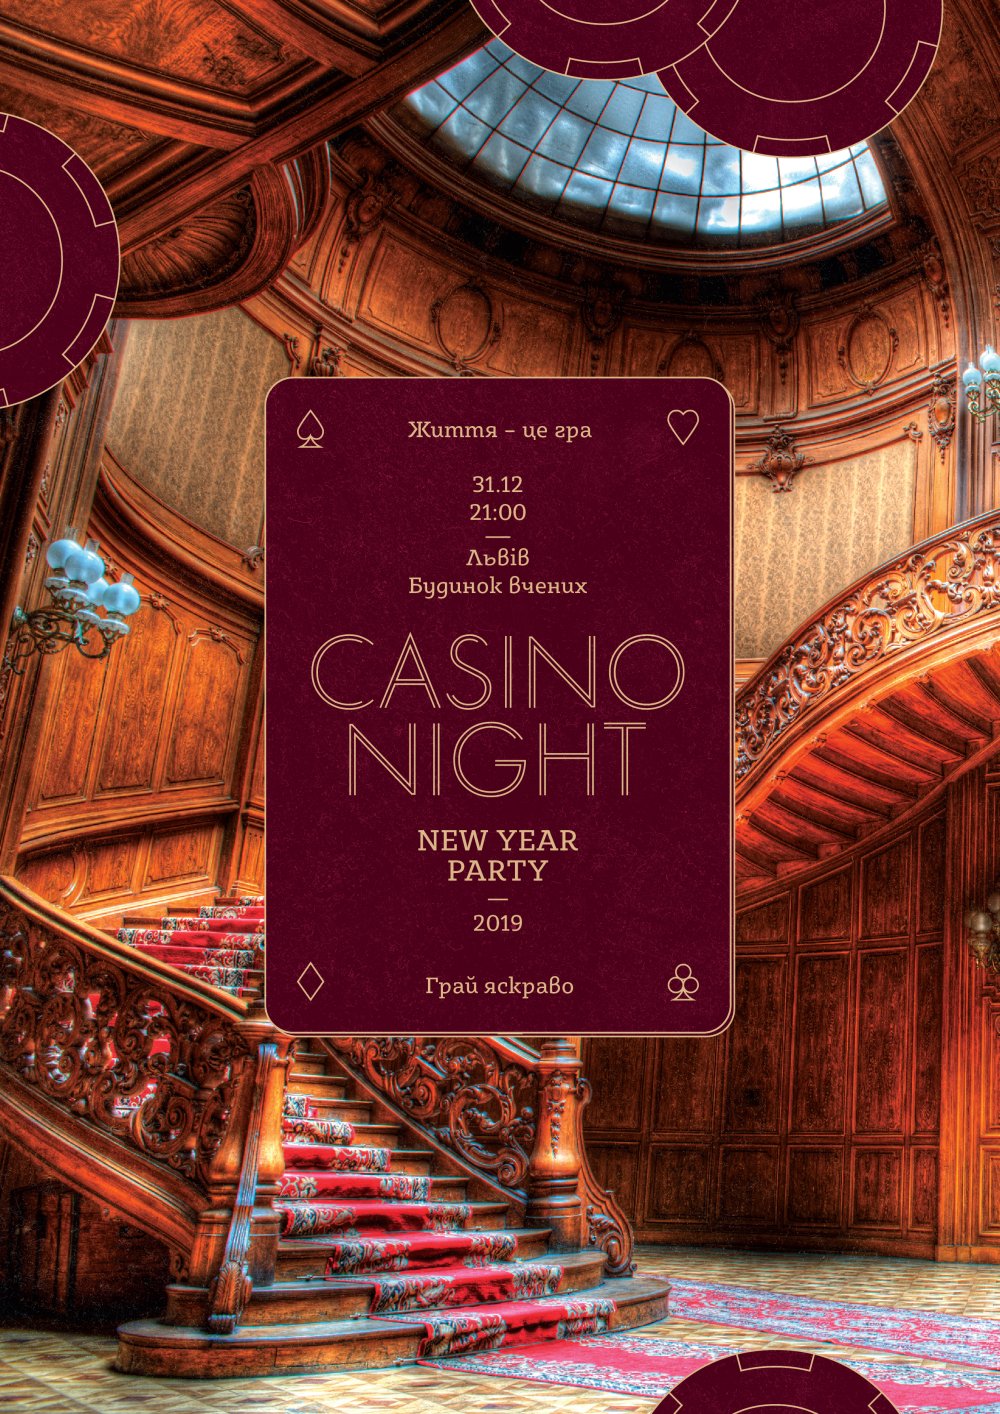 Casino night. New Year party 2019